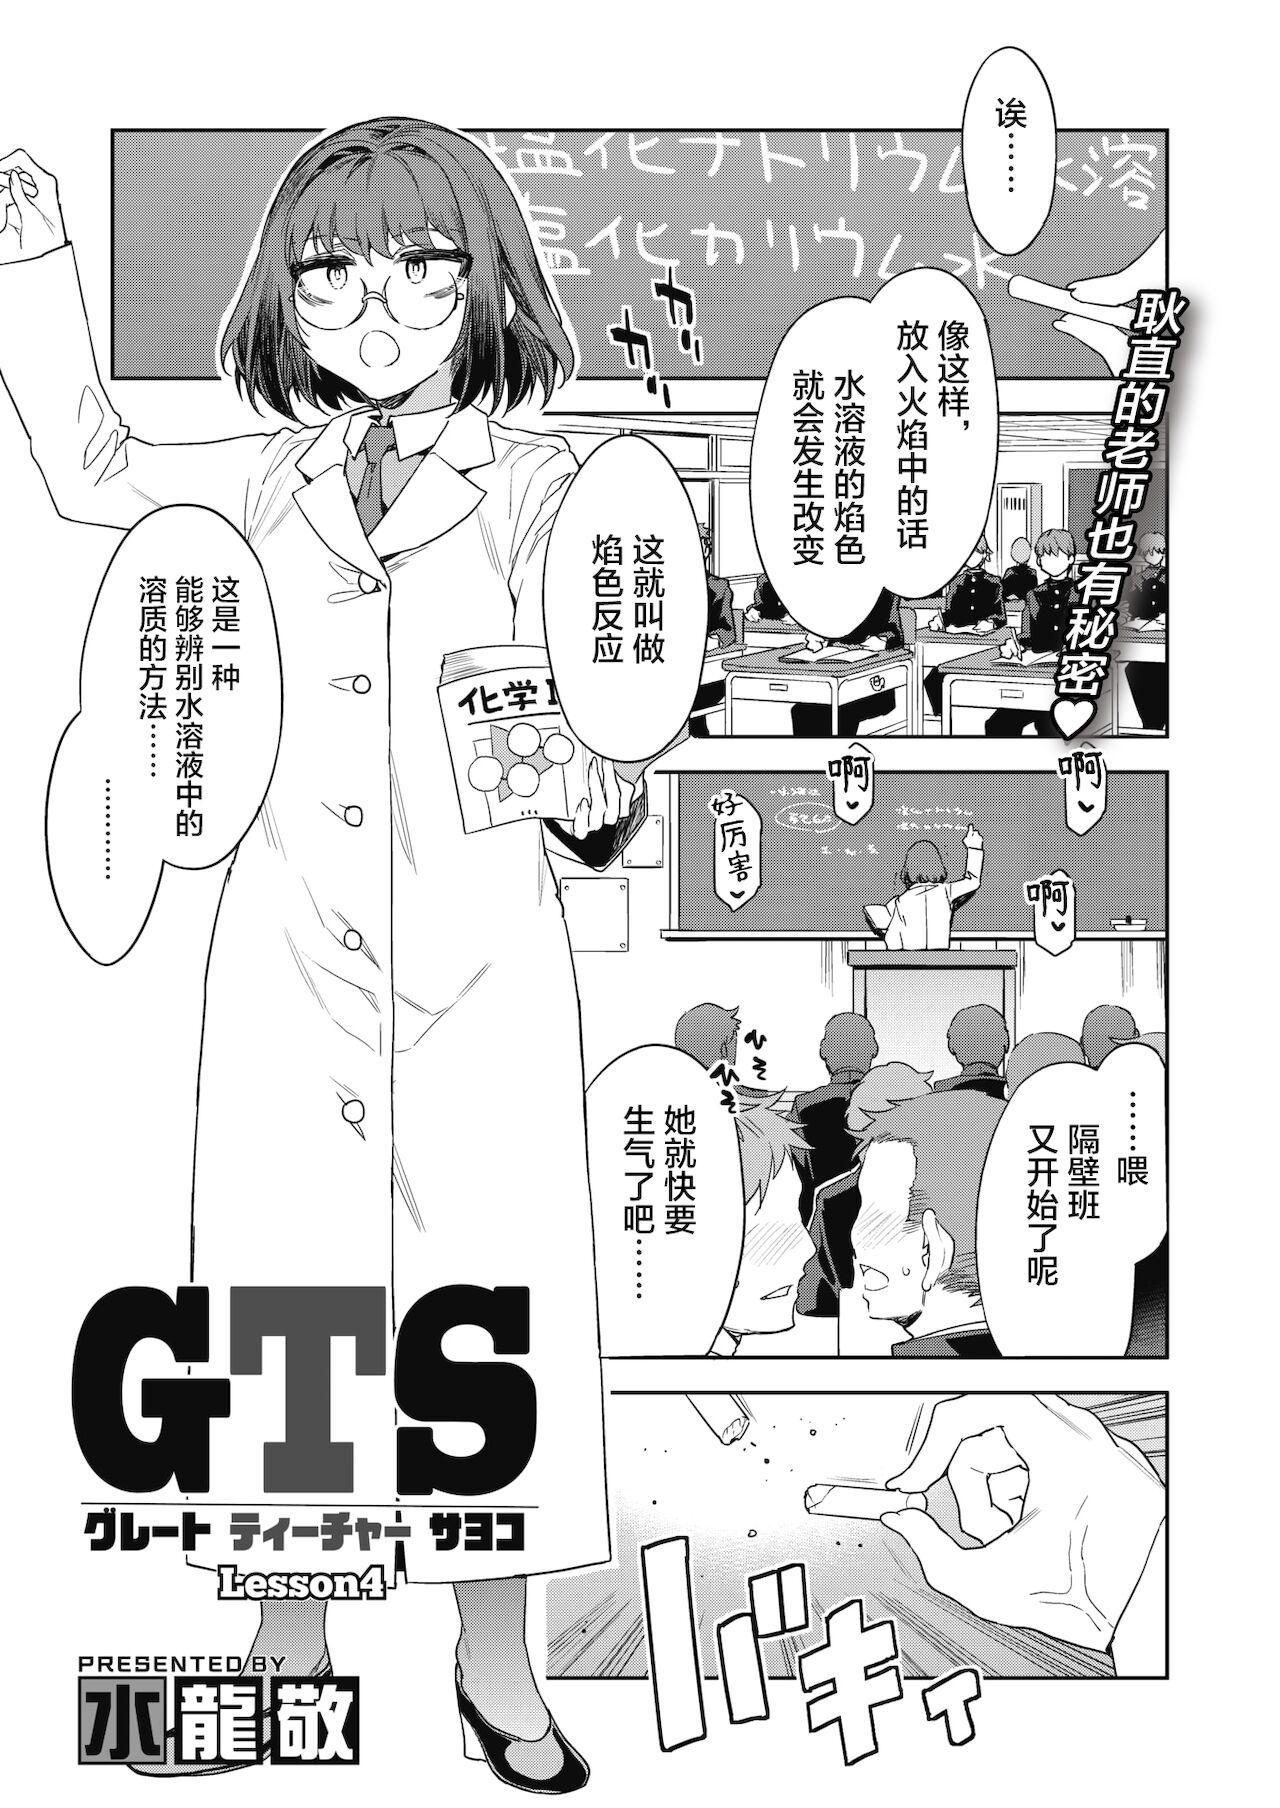 Thong GTS Great Teacher Sayoko Lesson 4 - Original Ftvgirls - Picture 1